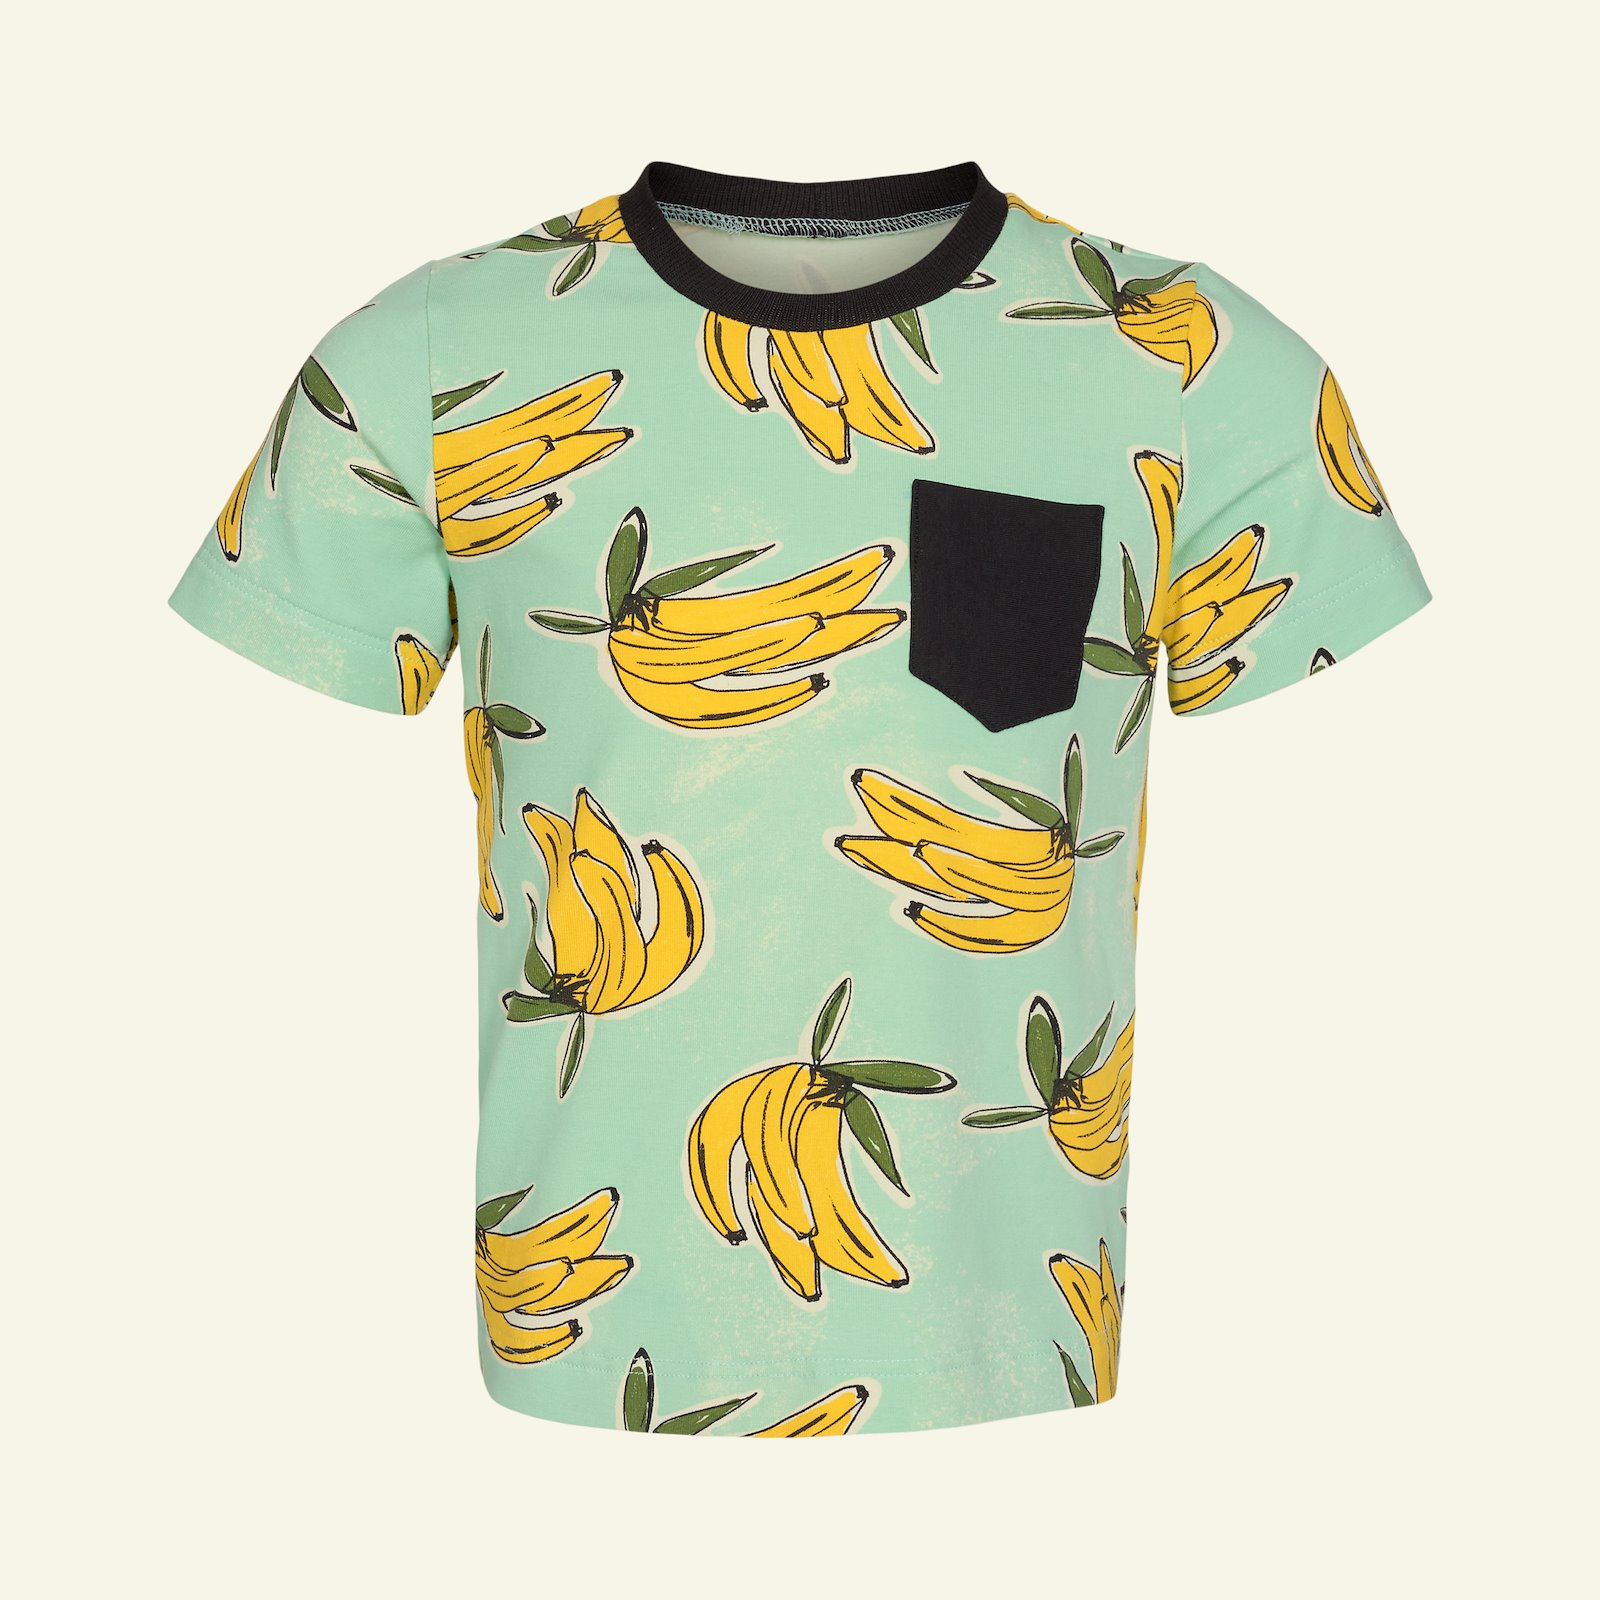 Stretch jersey mint med bananer p62017_272728_sskit